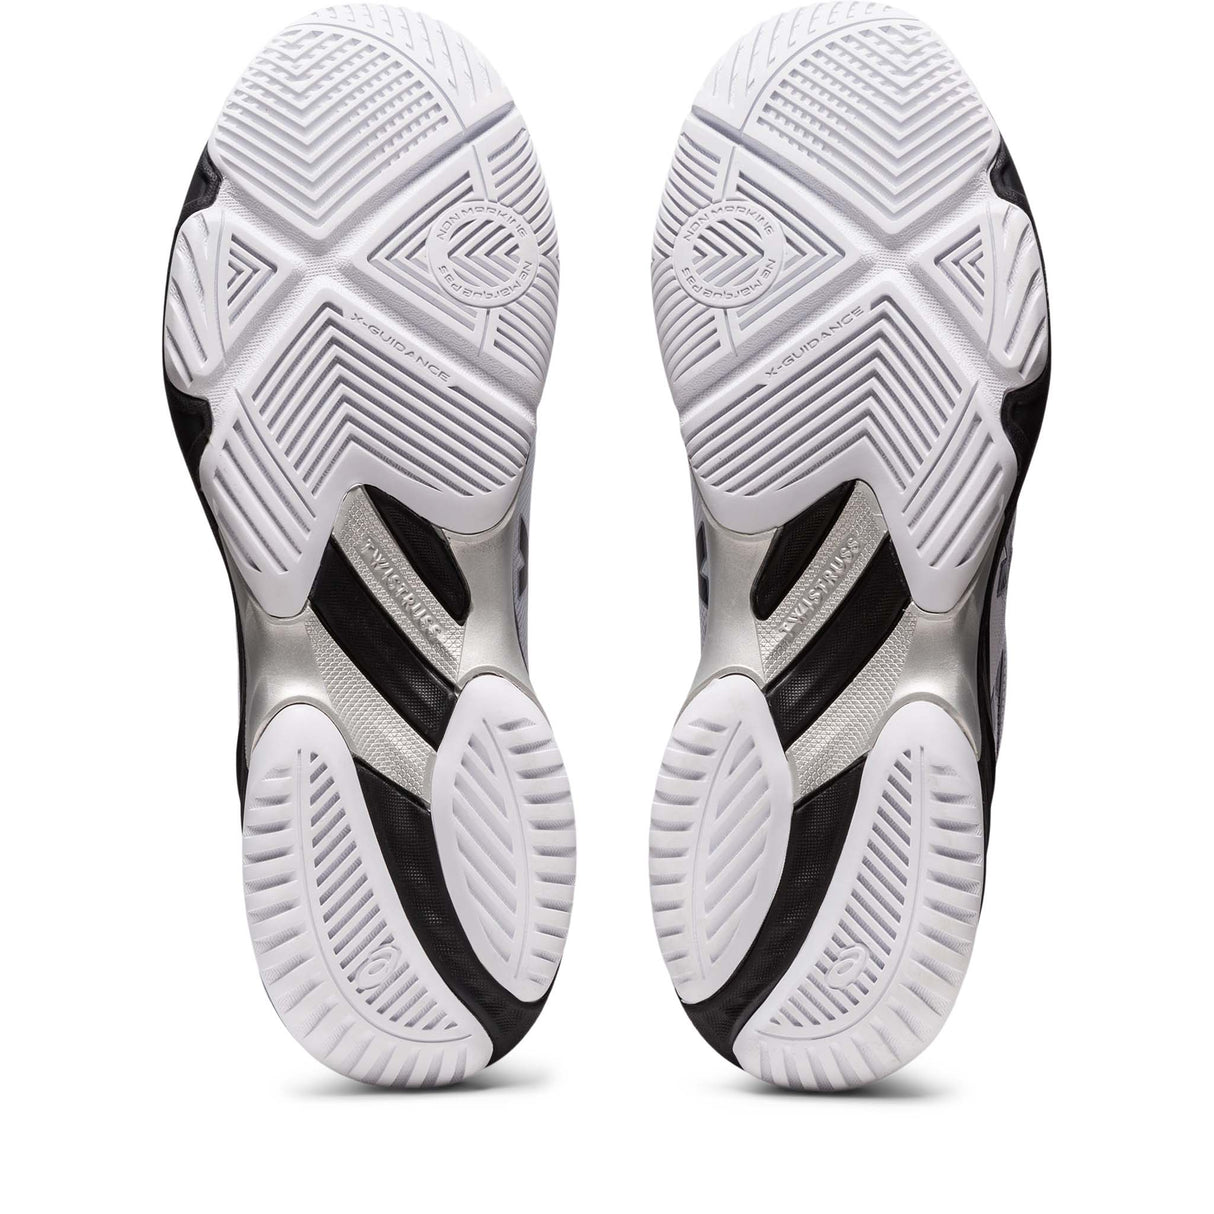 ASICS Netburner Ballistic FF 3 chaussures de volley-ball pour homme blanc noir semelle